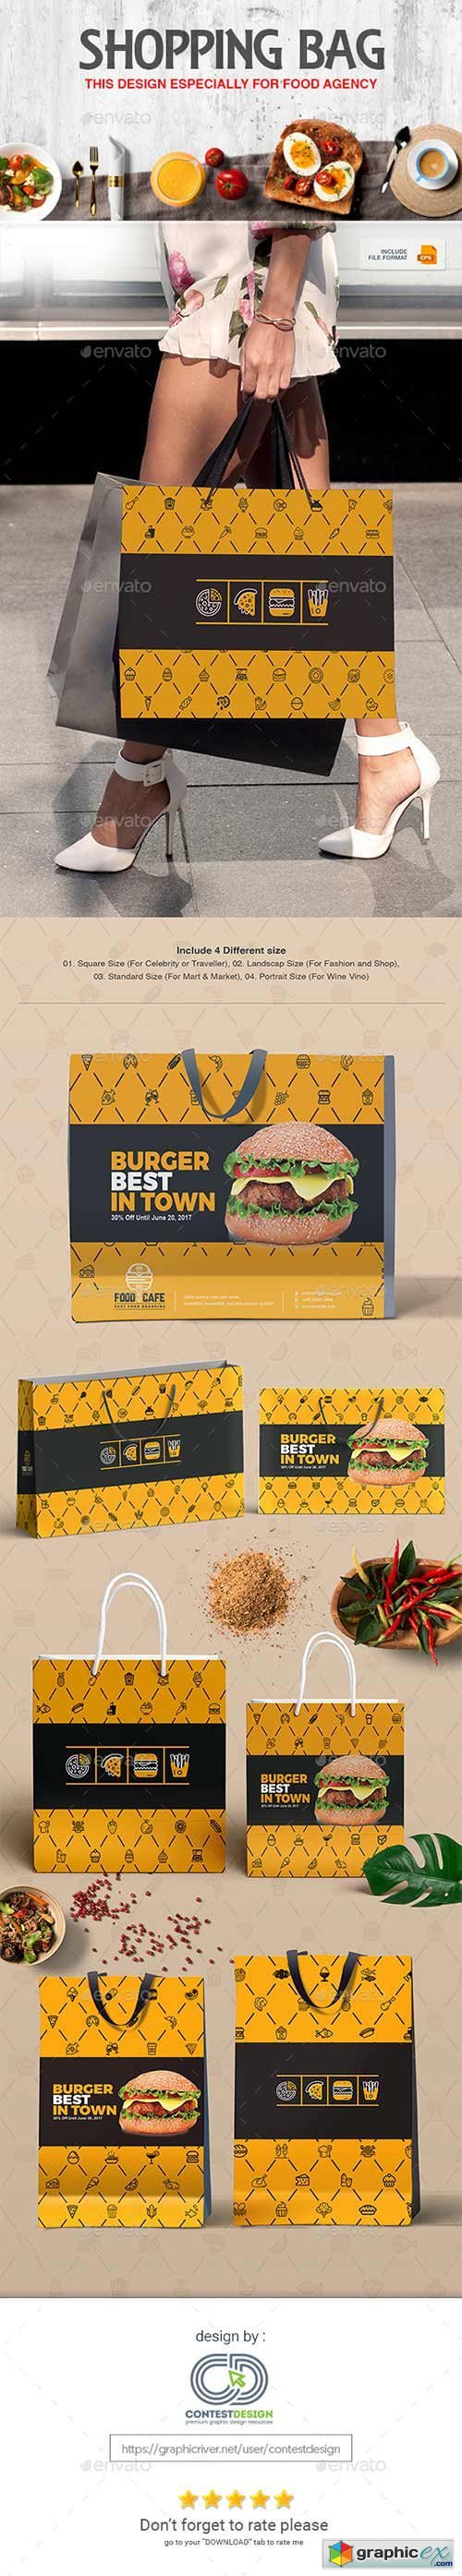 Shopping Bag Design Template for Fast Food / Restaurants / Cafe